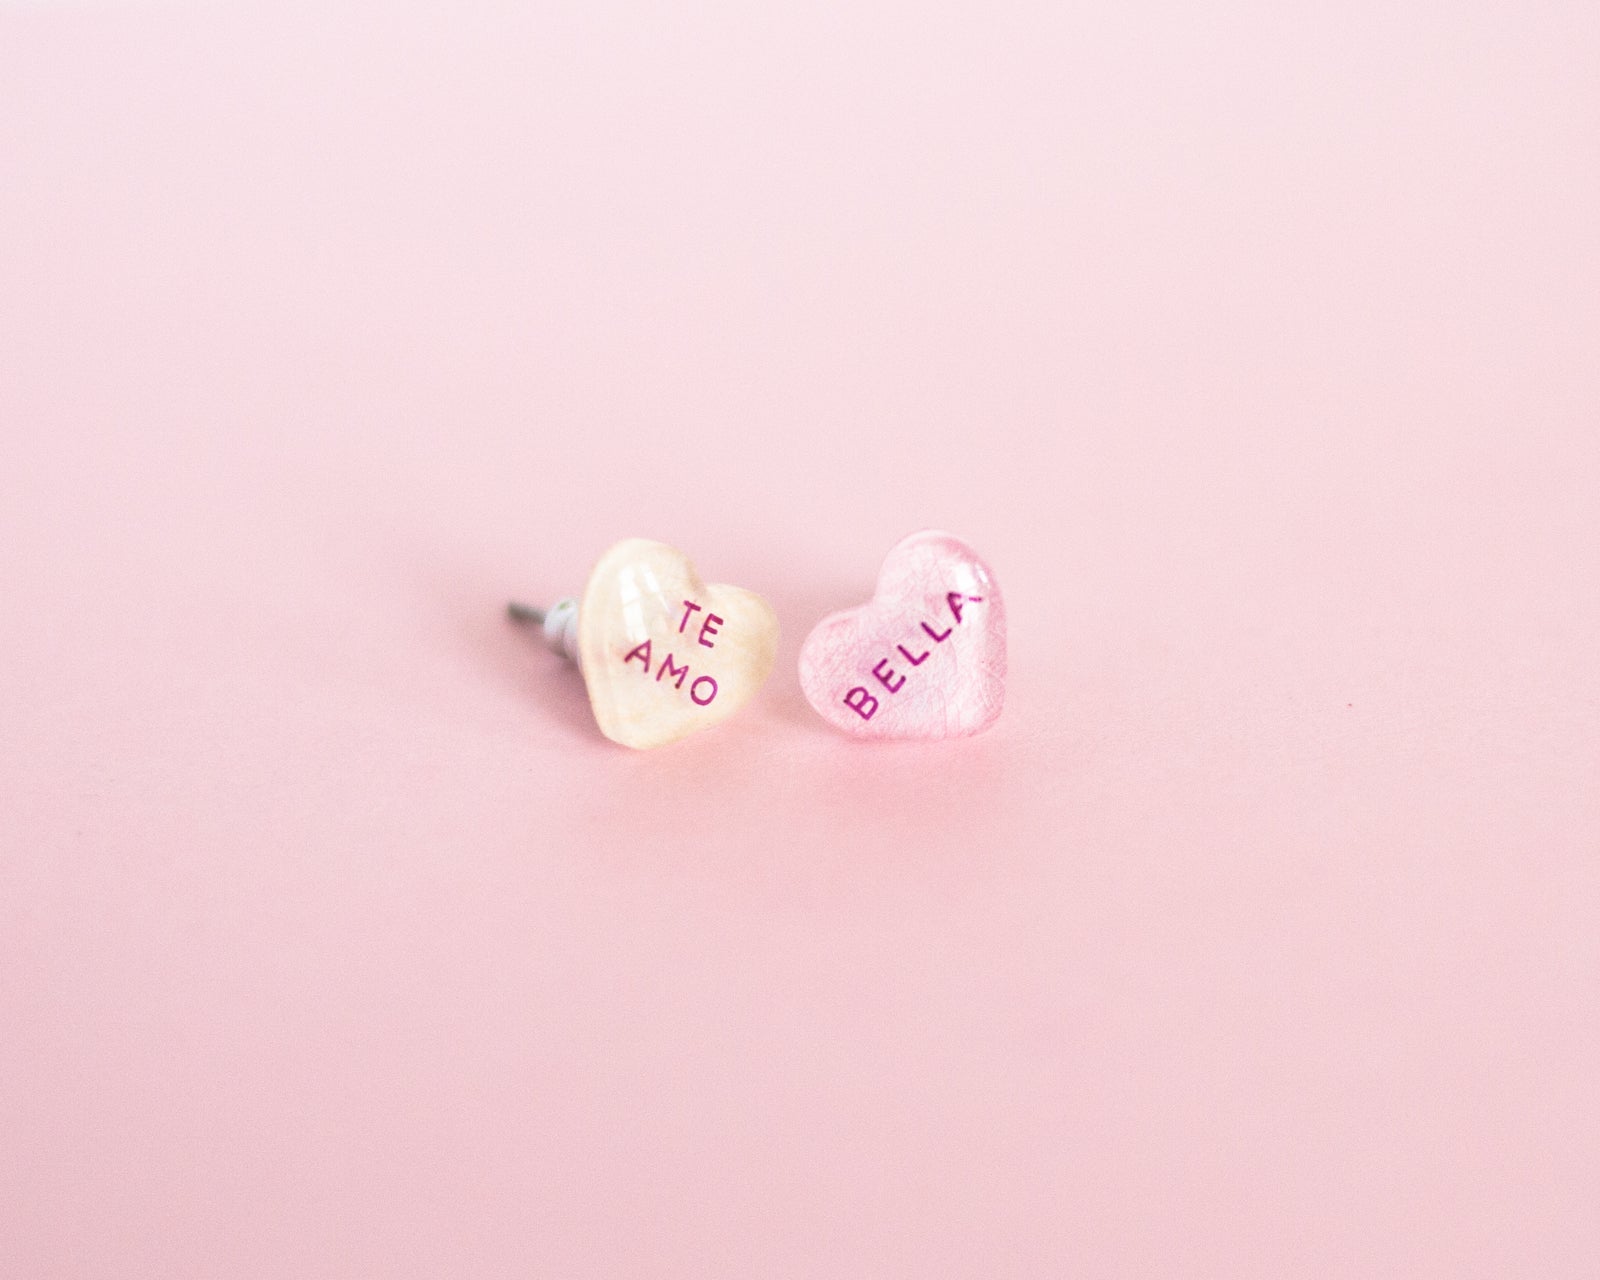 Spanish Valentine Candy Heart Earrings: TE AMO + BELLA